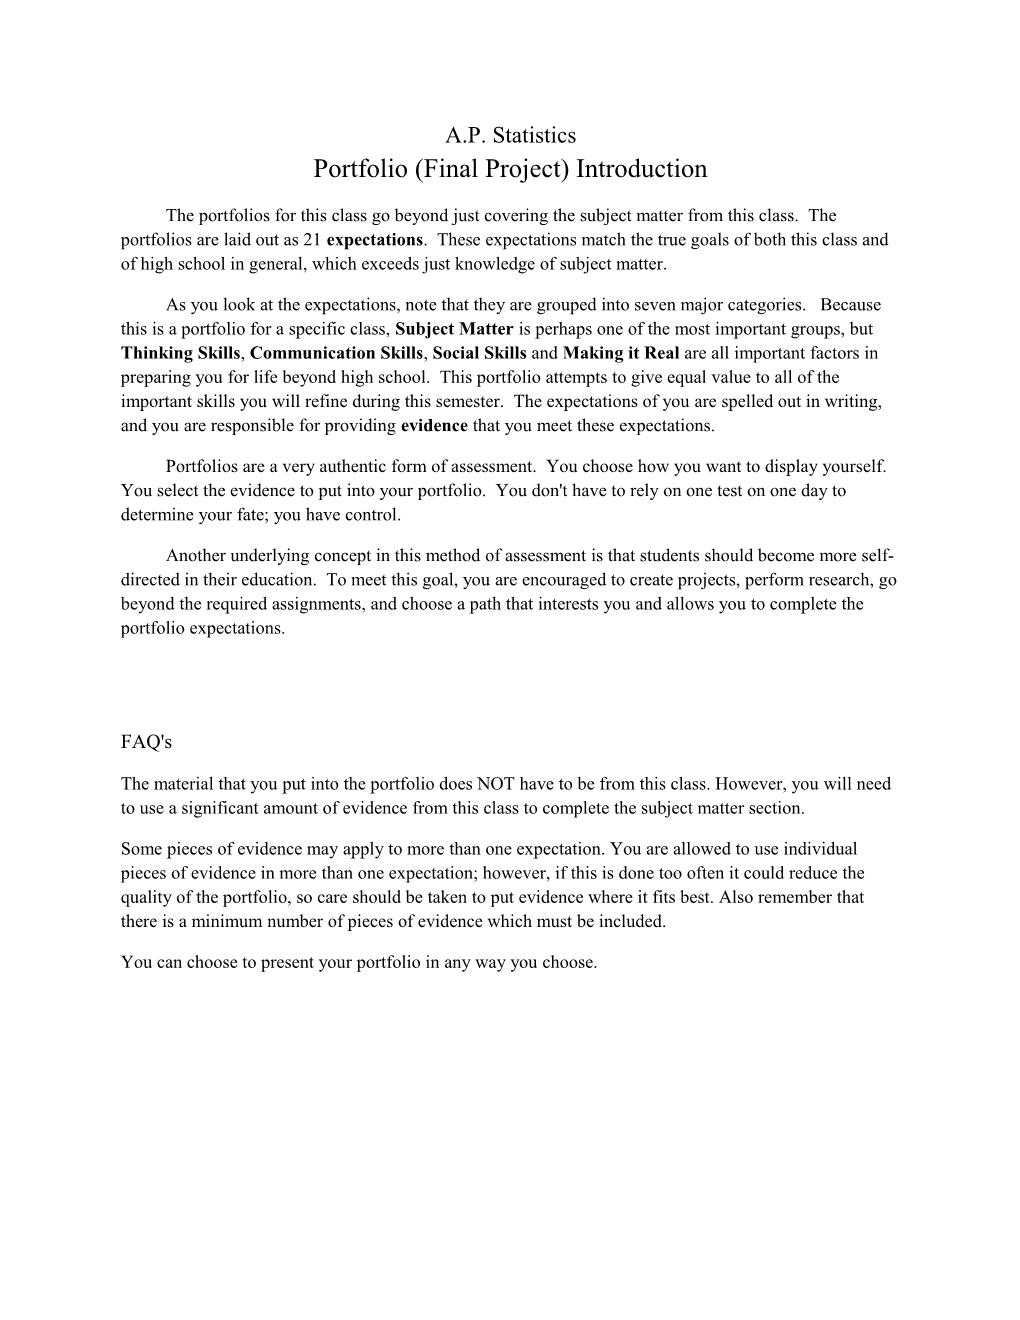 A.P. Statistics Portfolio (Final Project) Introduction